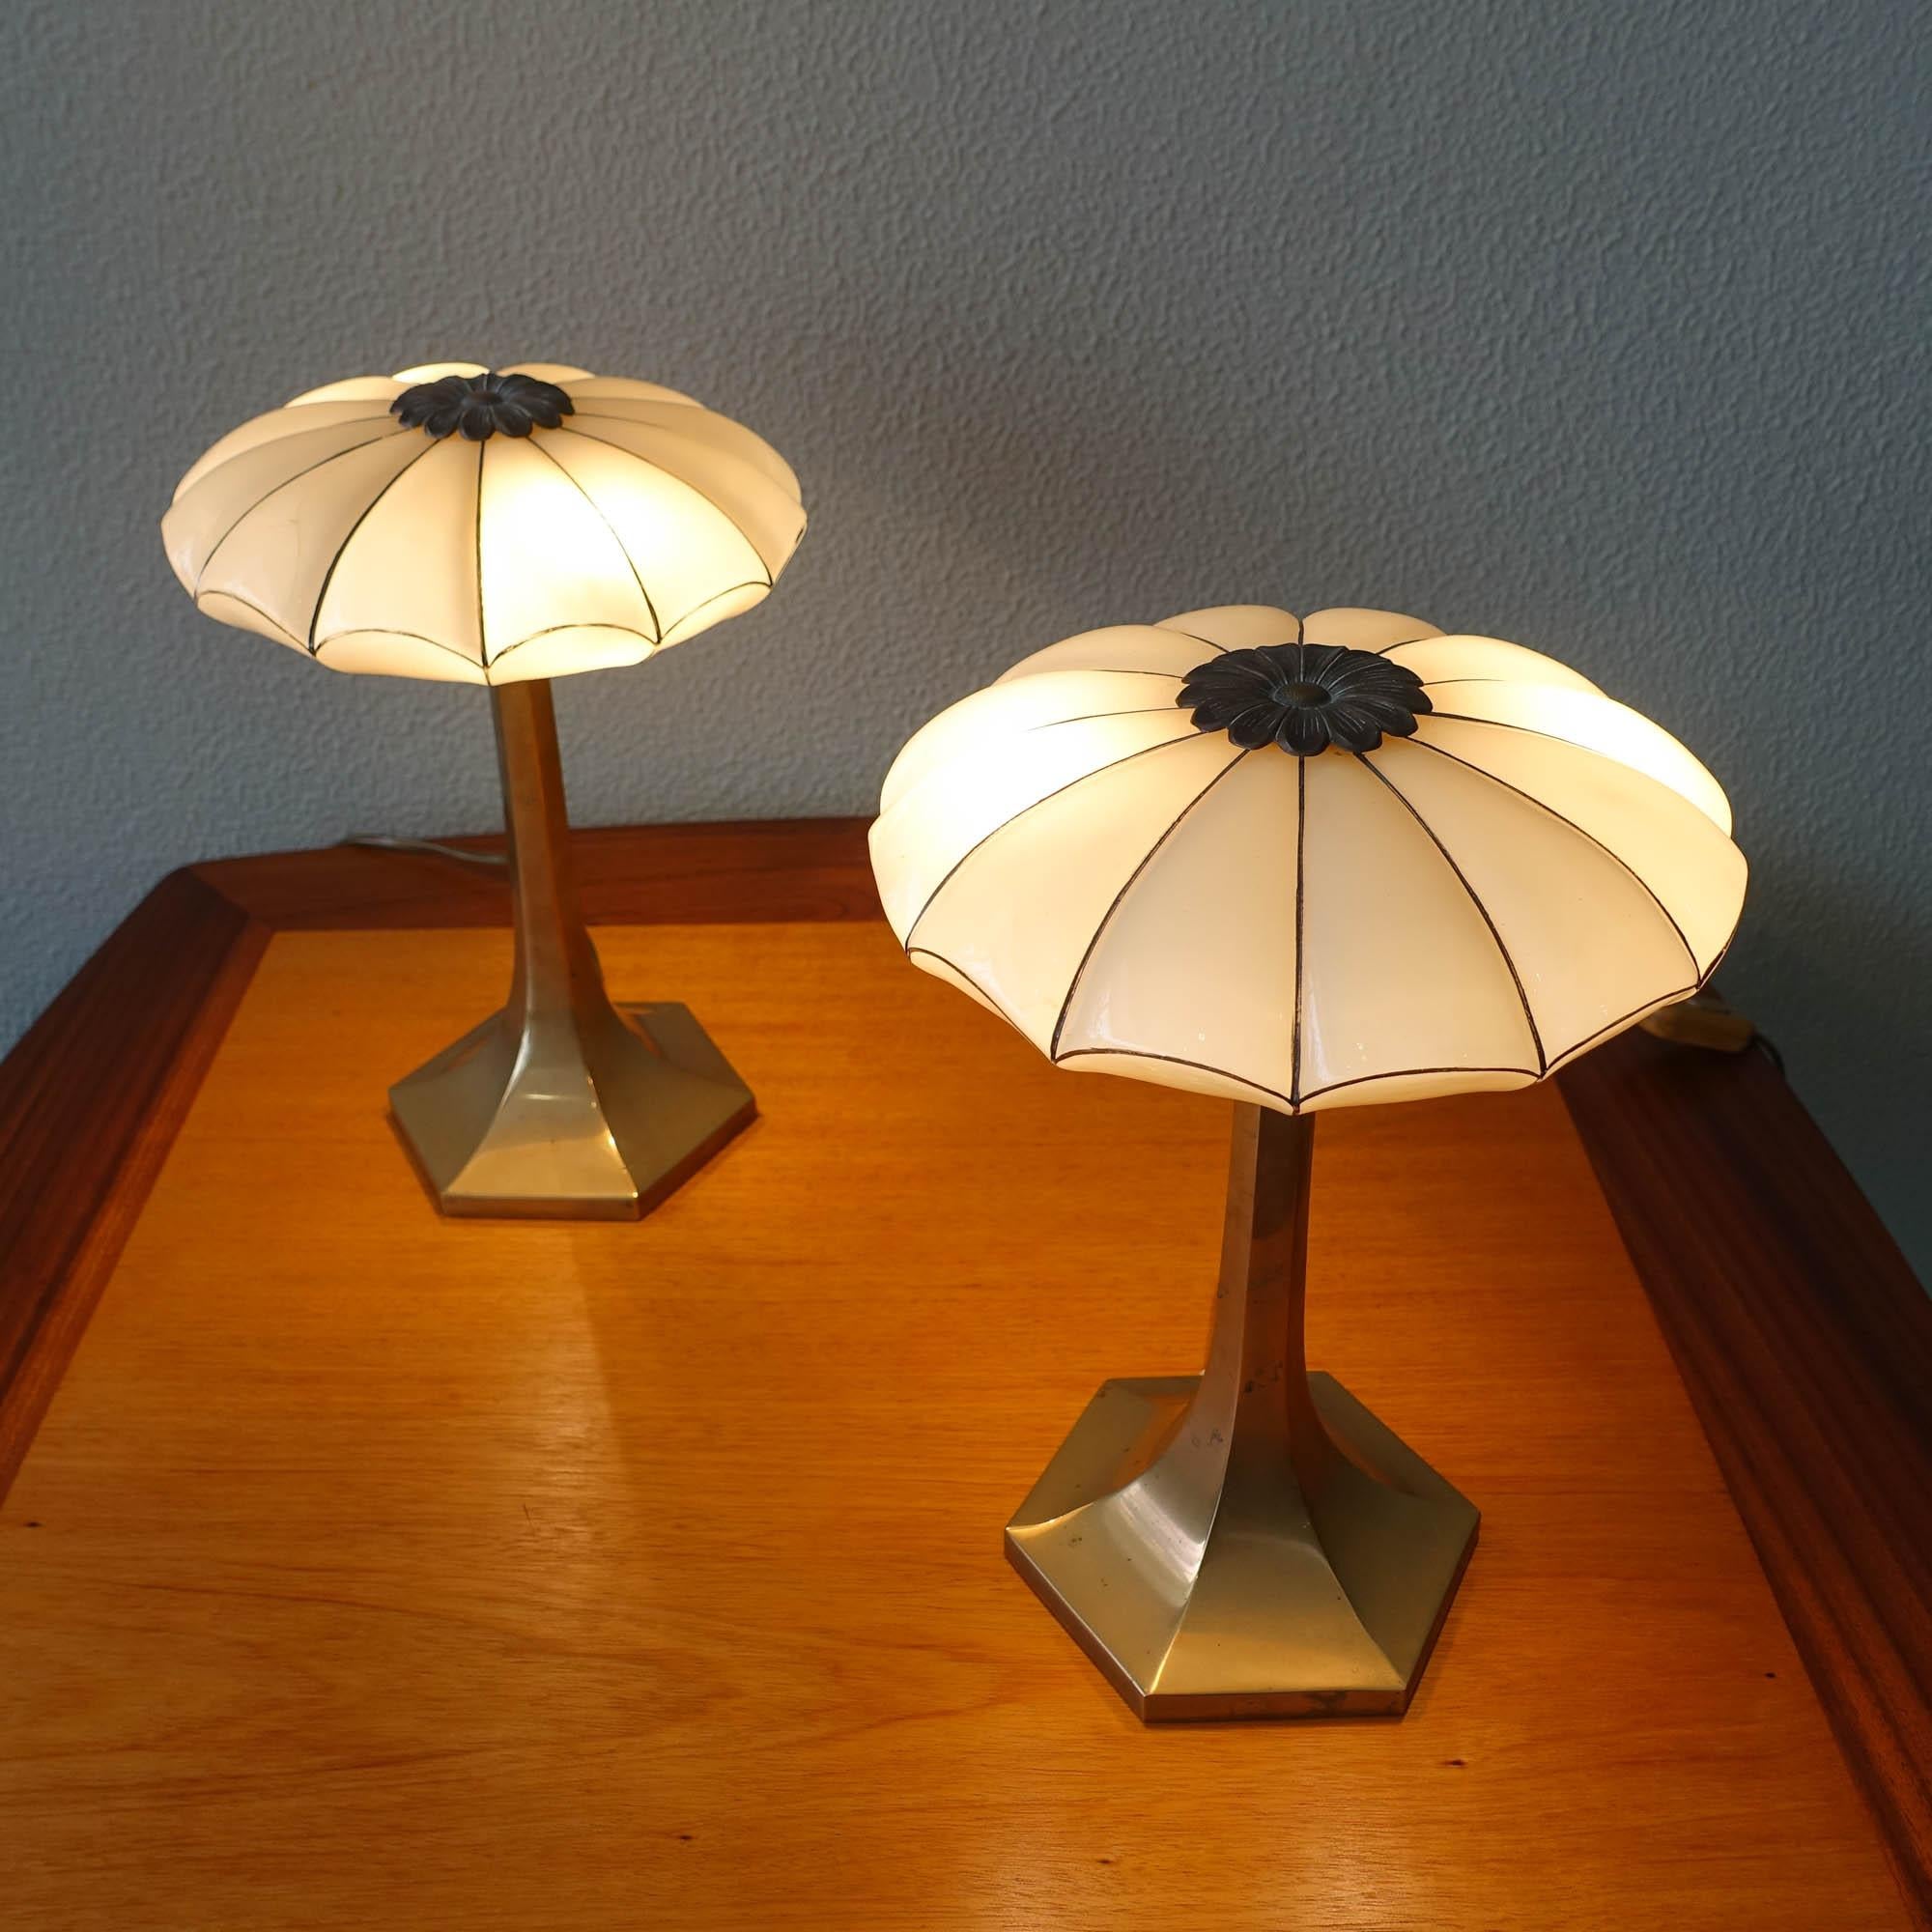 Pair of Art Deco Table Lamps from Josef Hoffman for Wiener Werkstatte, 1930's 3